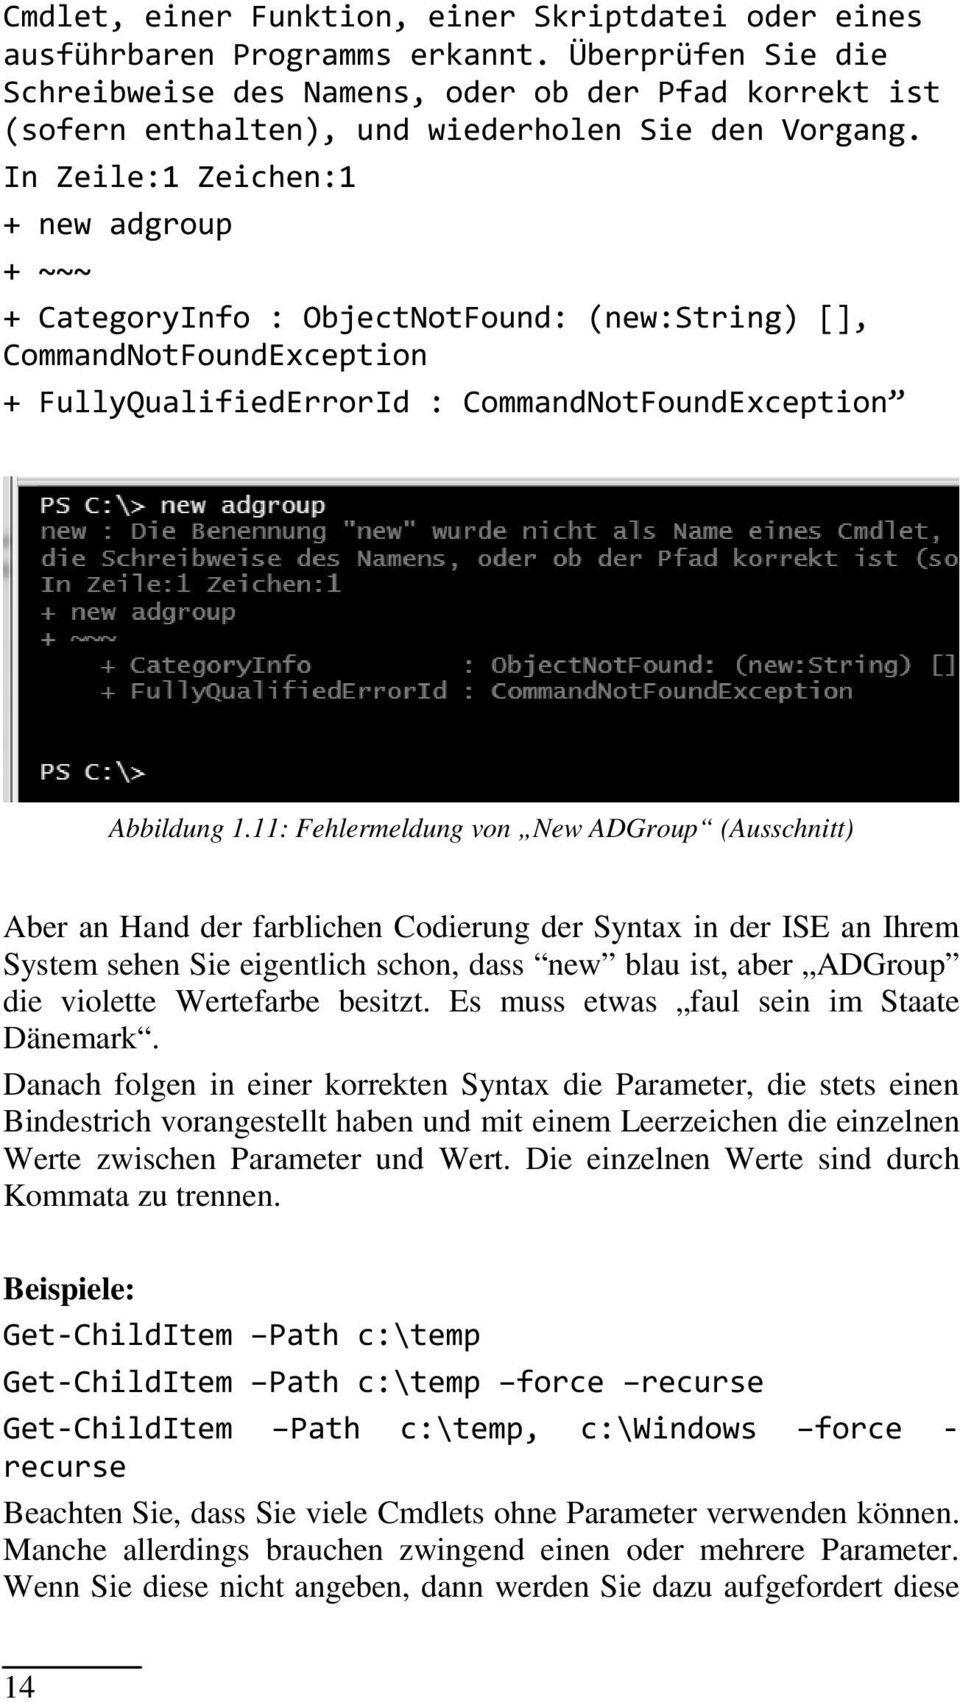 In Zeile:1 Zeichen:1 + new adgroup + ~~~ + CategoryInfo : ObjectNotFound: (new:string) [], CommandNotFoundException + FullyQualifiedErrorId : CommandNotFoundException Abbildung 1.